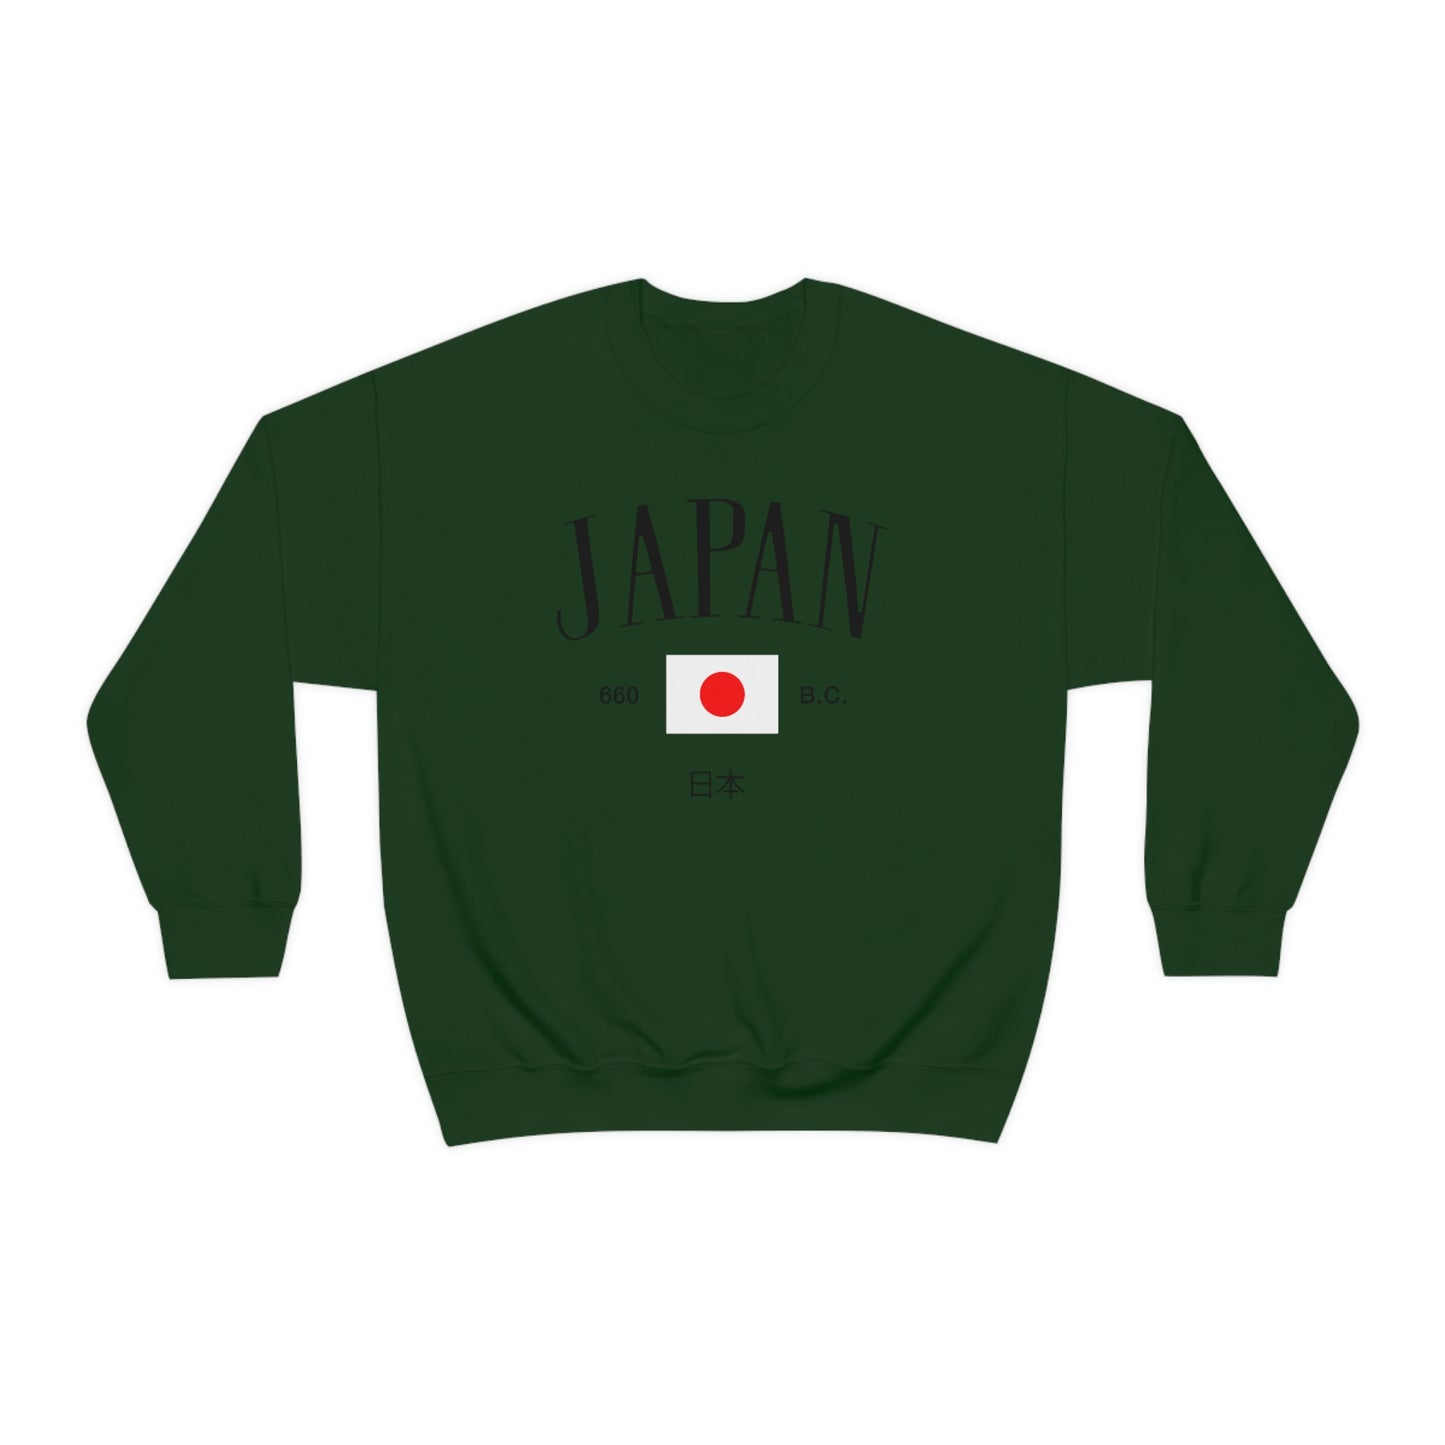 Japan Sweatshirt Tokyo Japanese Flag Soft Comfortable Crewneck Pullover Unisex 90s College style